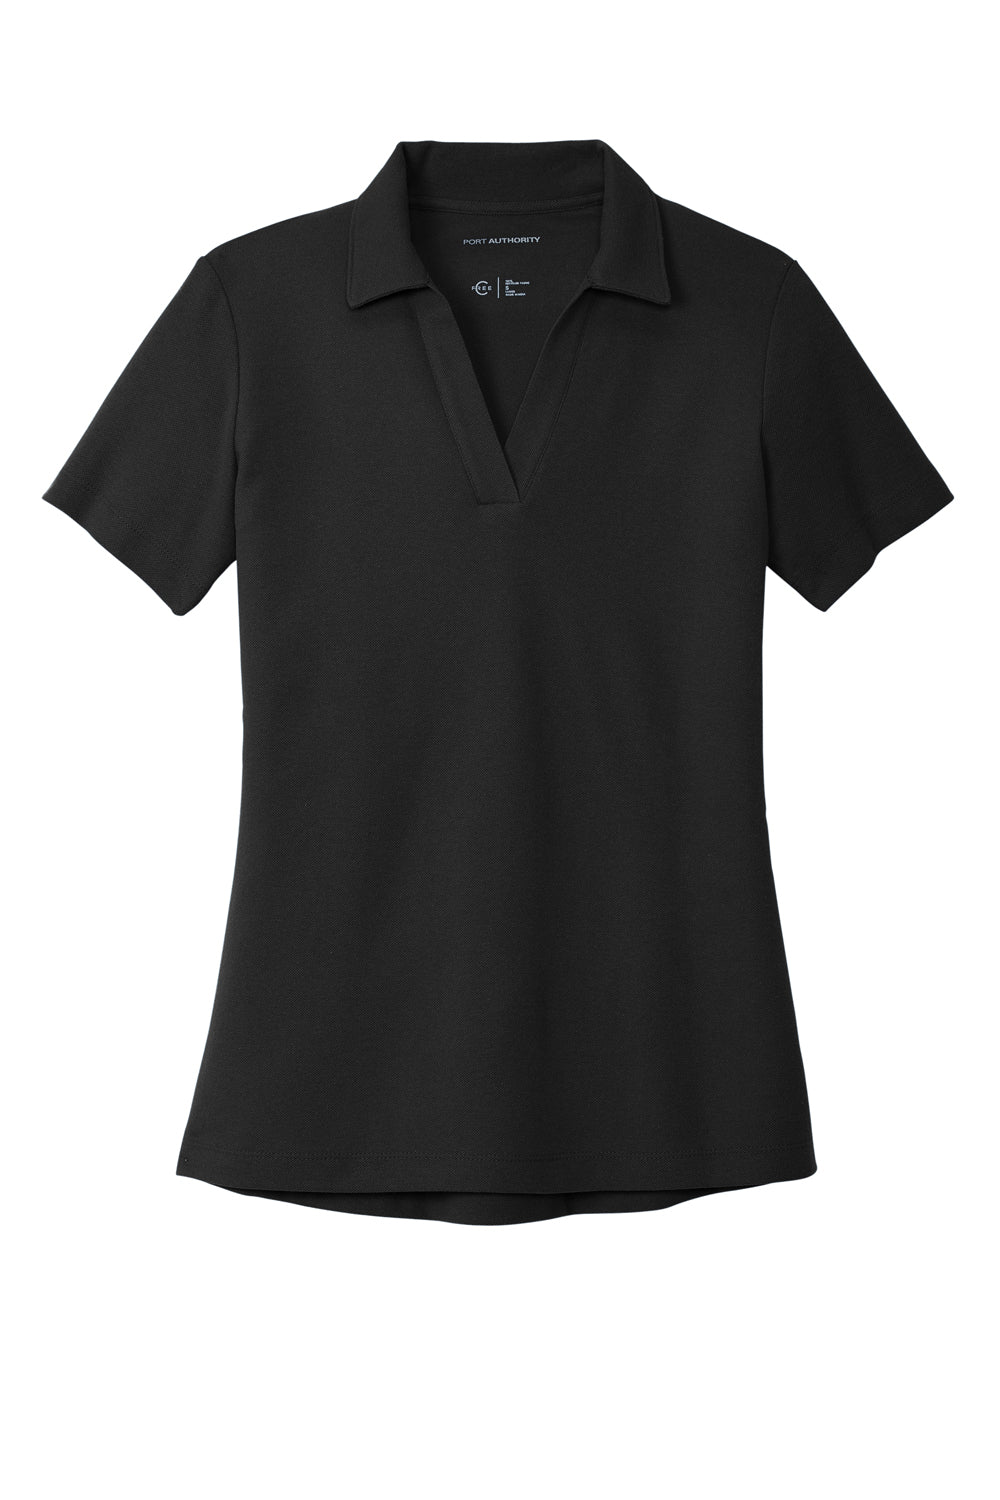 Port Authority LK867 Womens C-FREE Pique Short Sleeve Polo Shirt Black Flat Front